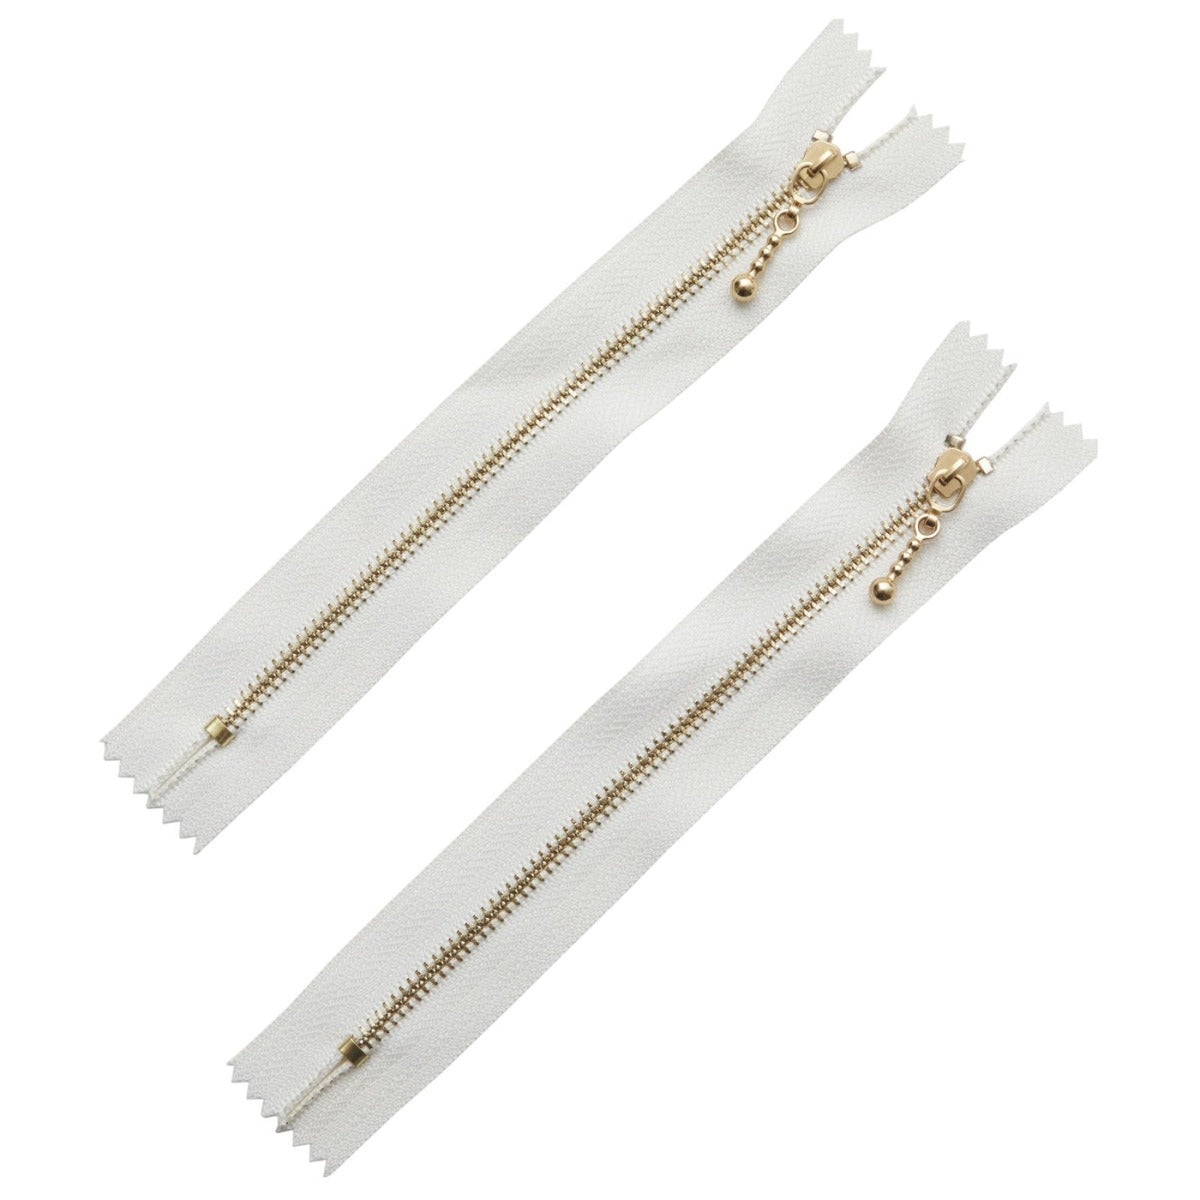 Zipper - Macaroon Zipper - White 6" Zipper with Droplet Pull (2ct)